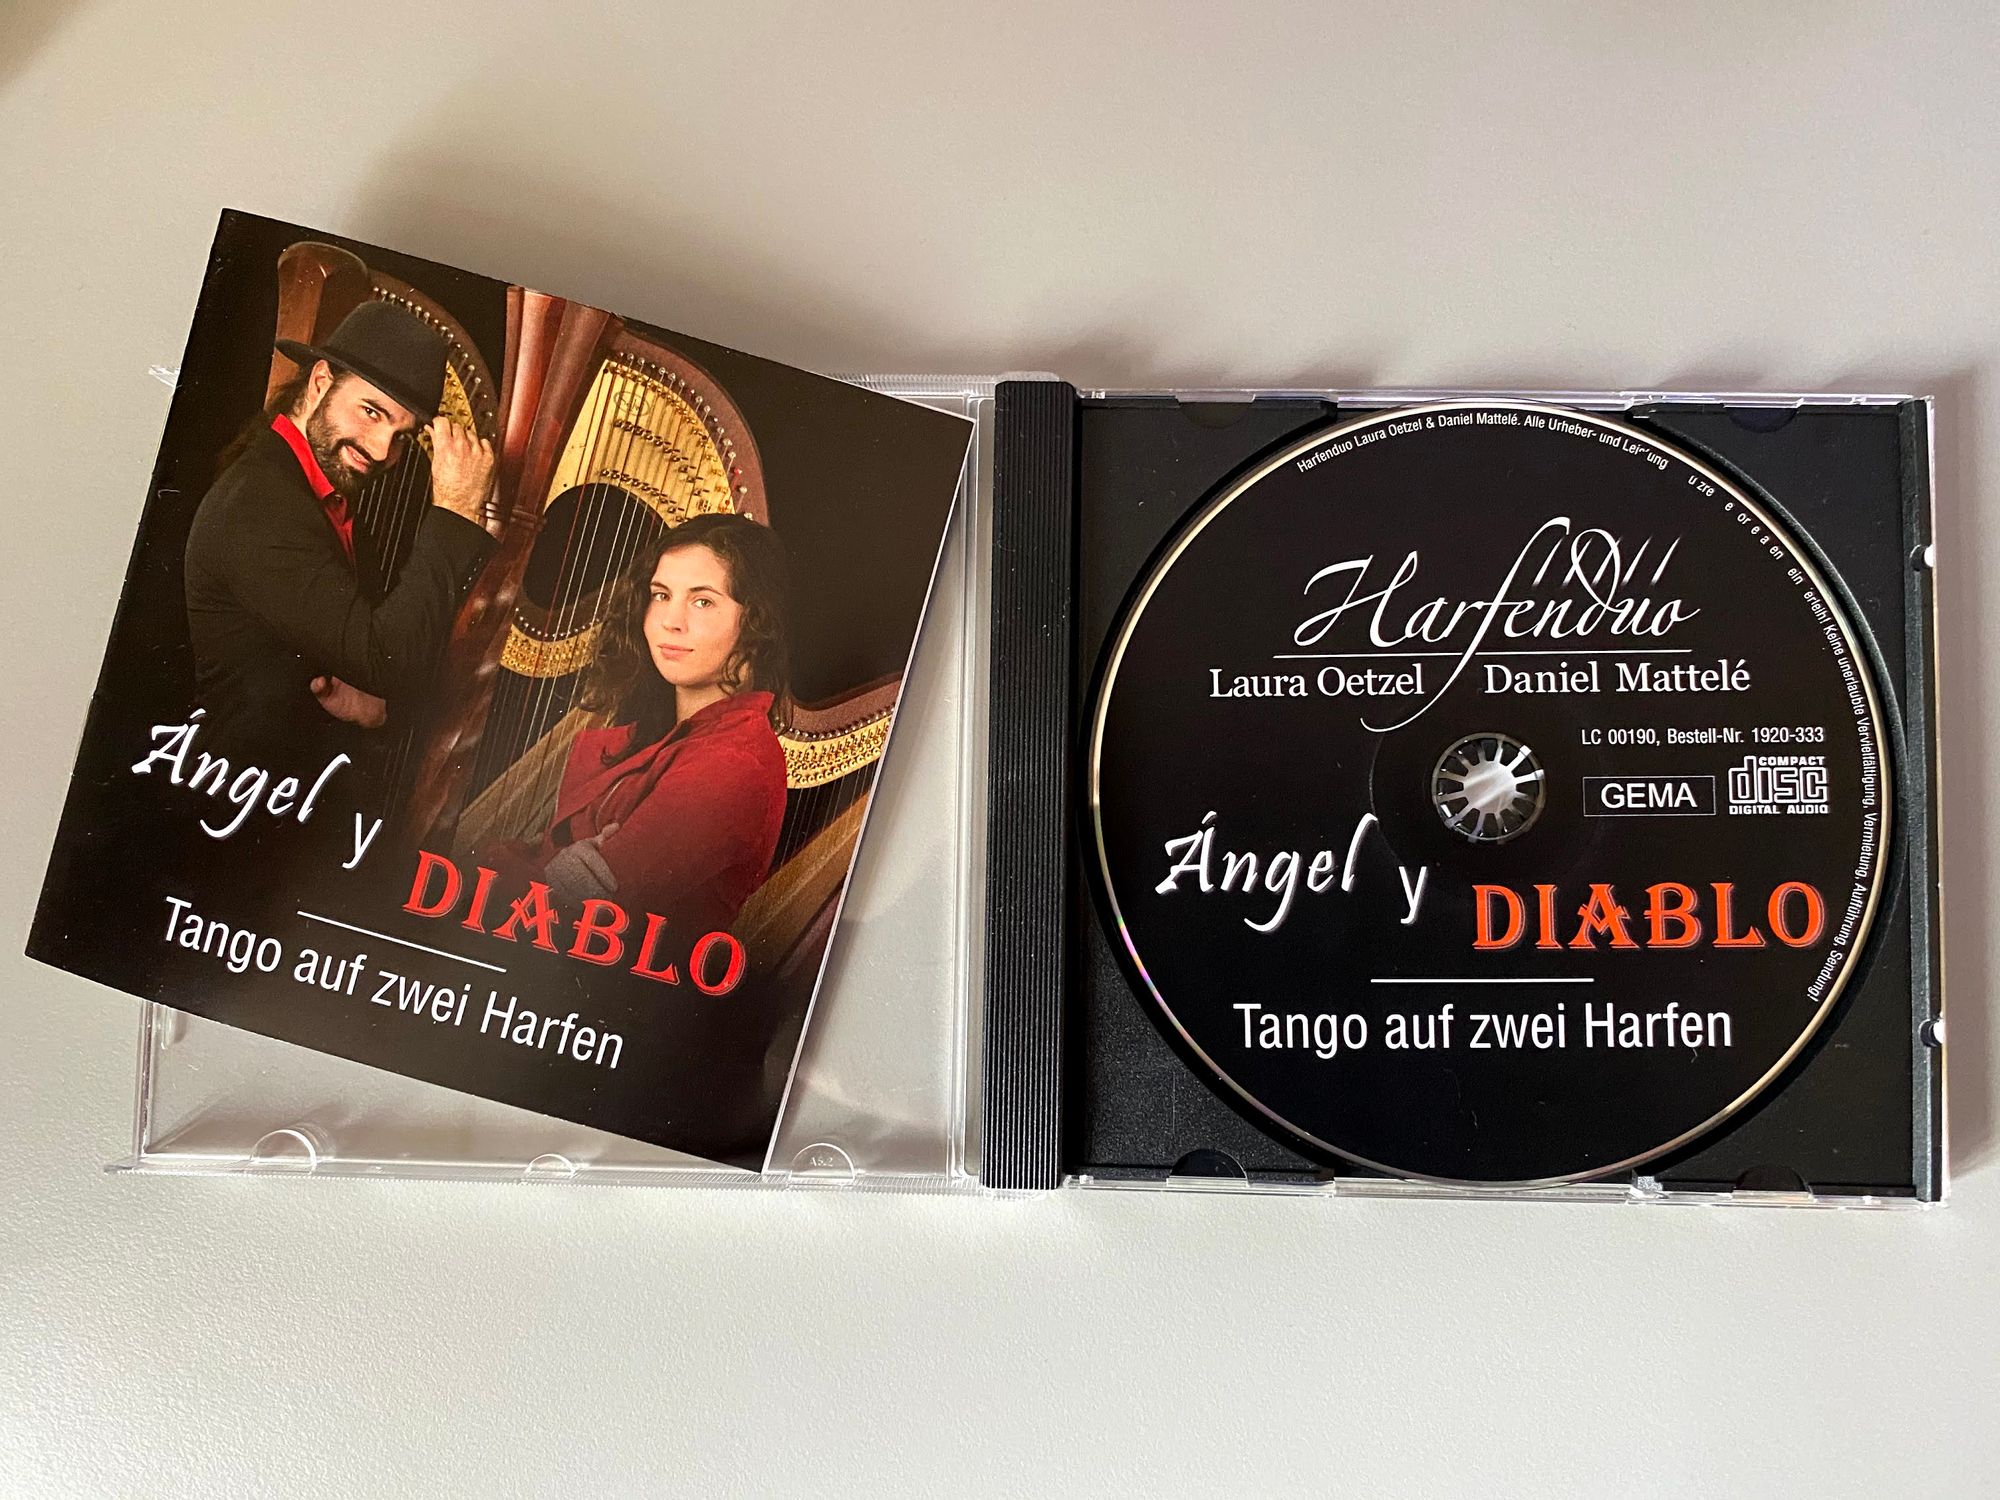 Review: Ángel y diablo by Das Harfenduo